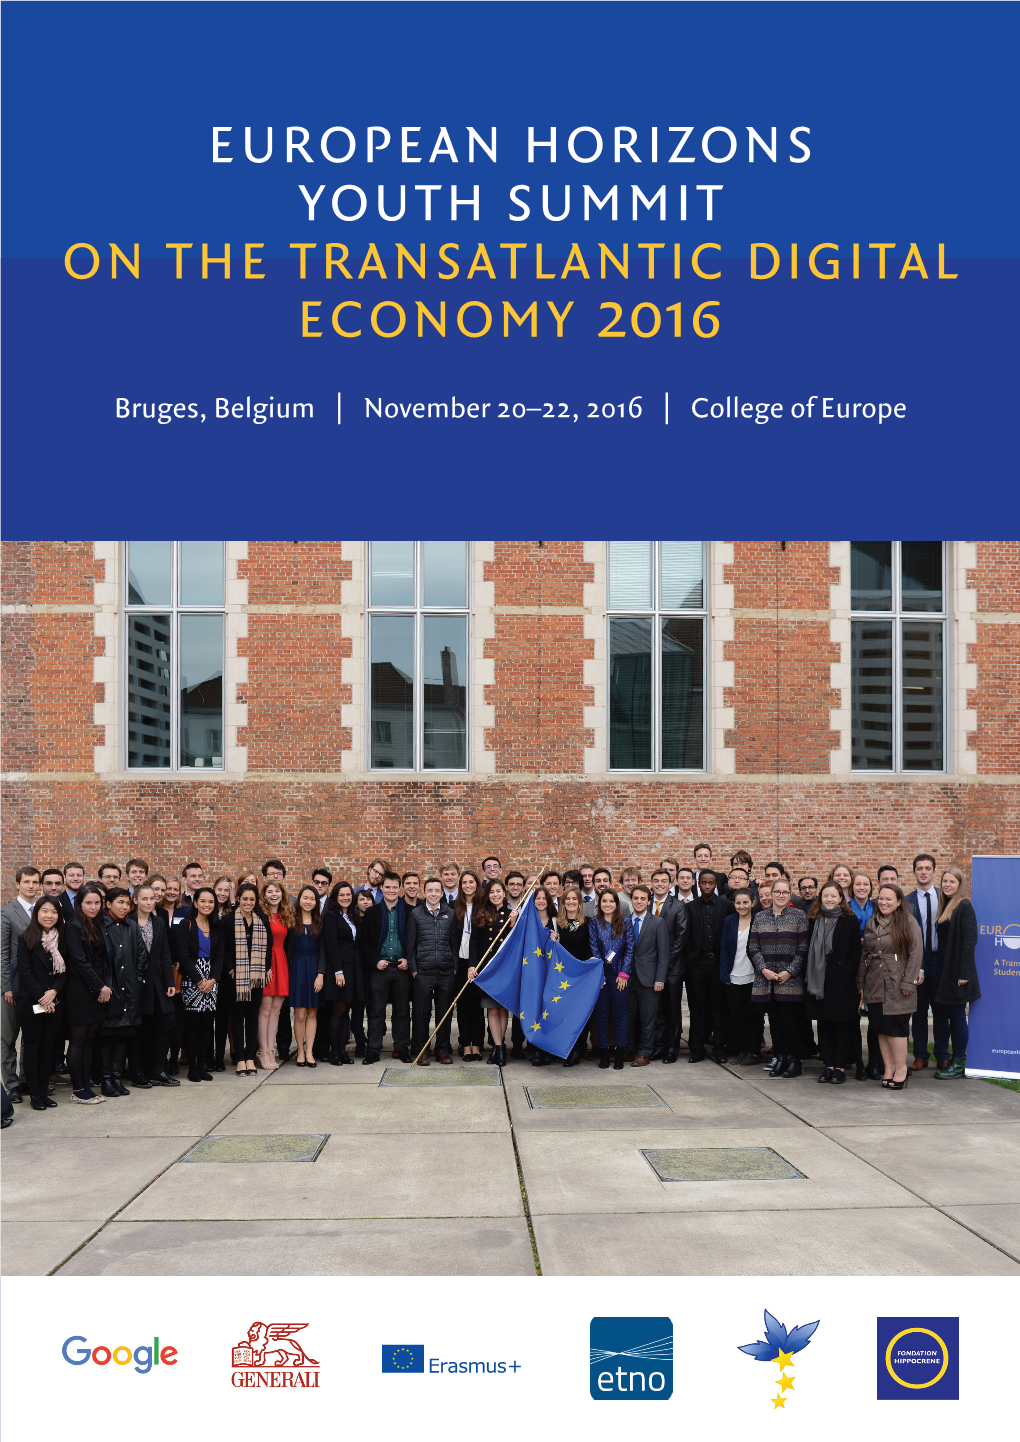 European Horizons Youth Summit on the Transatlantic Digital Economy 2016